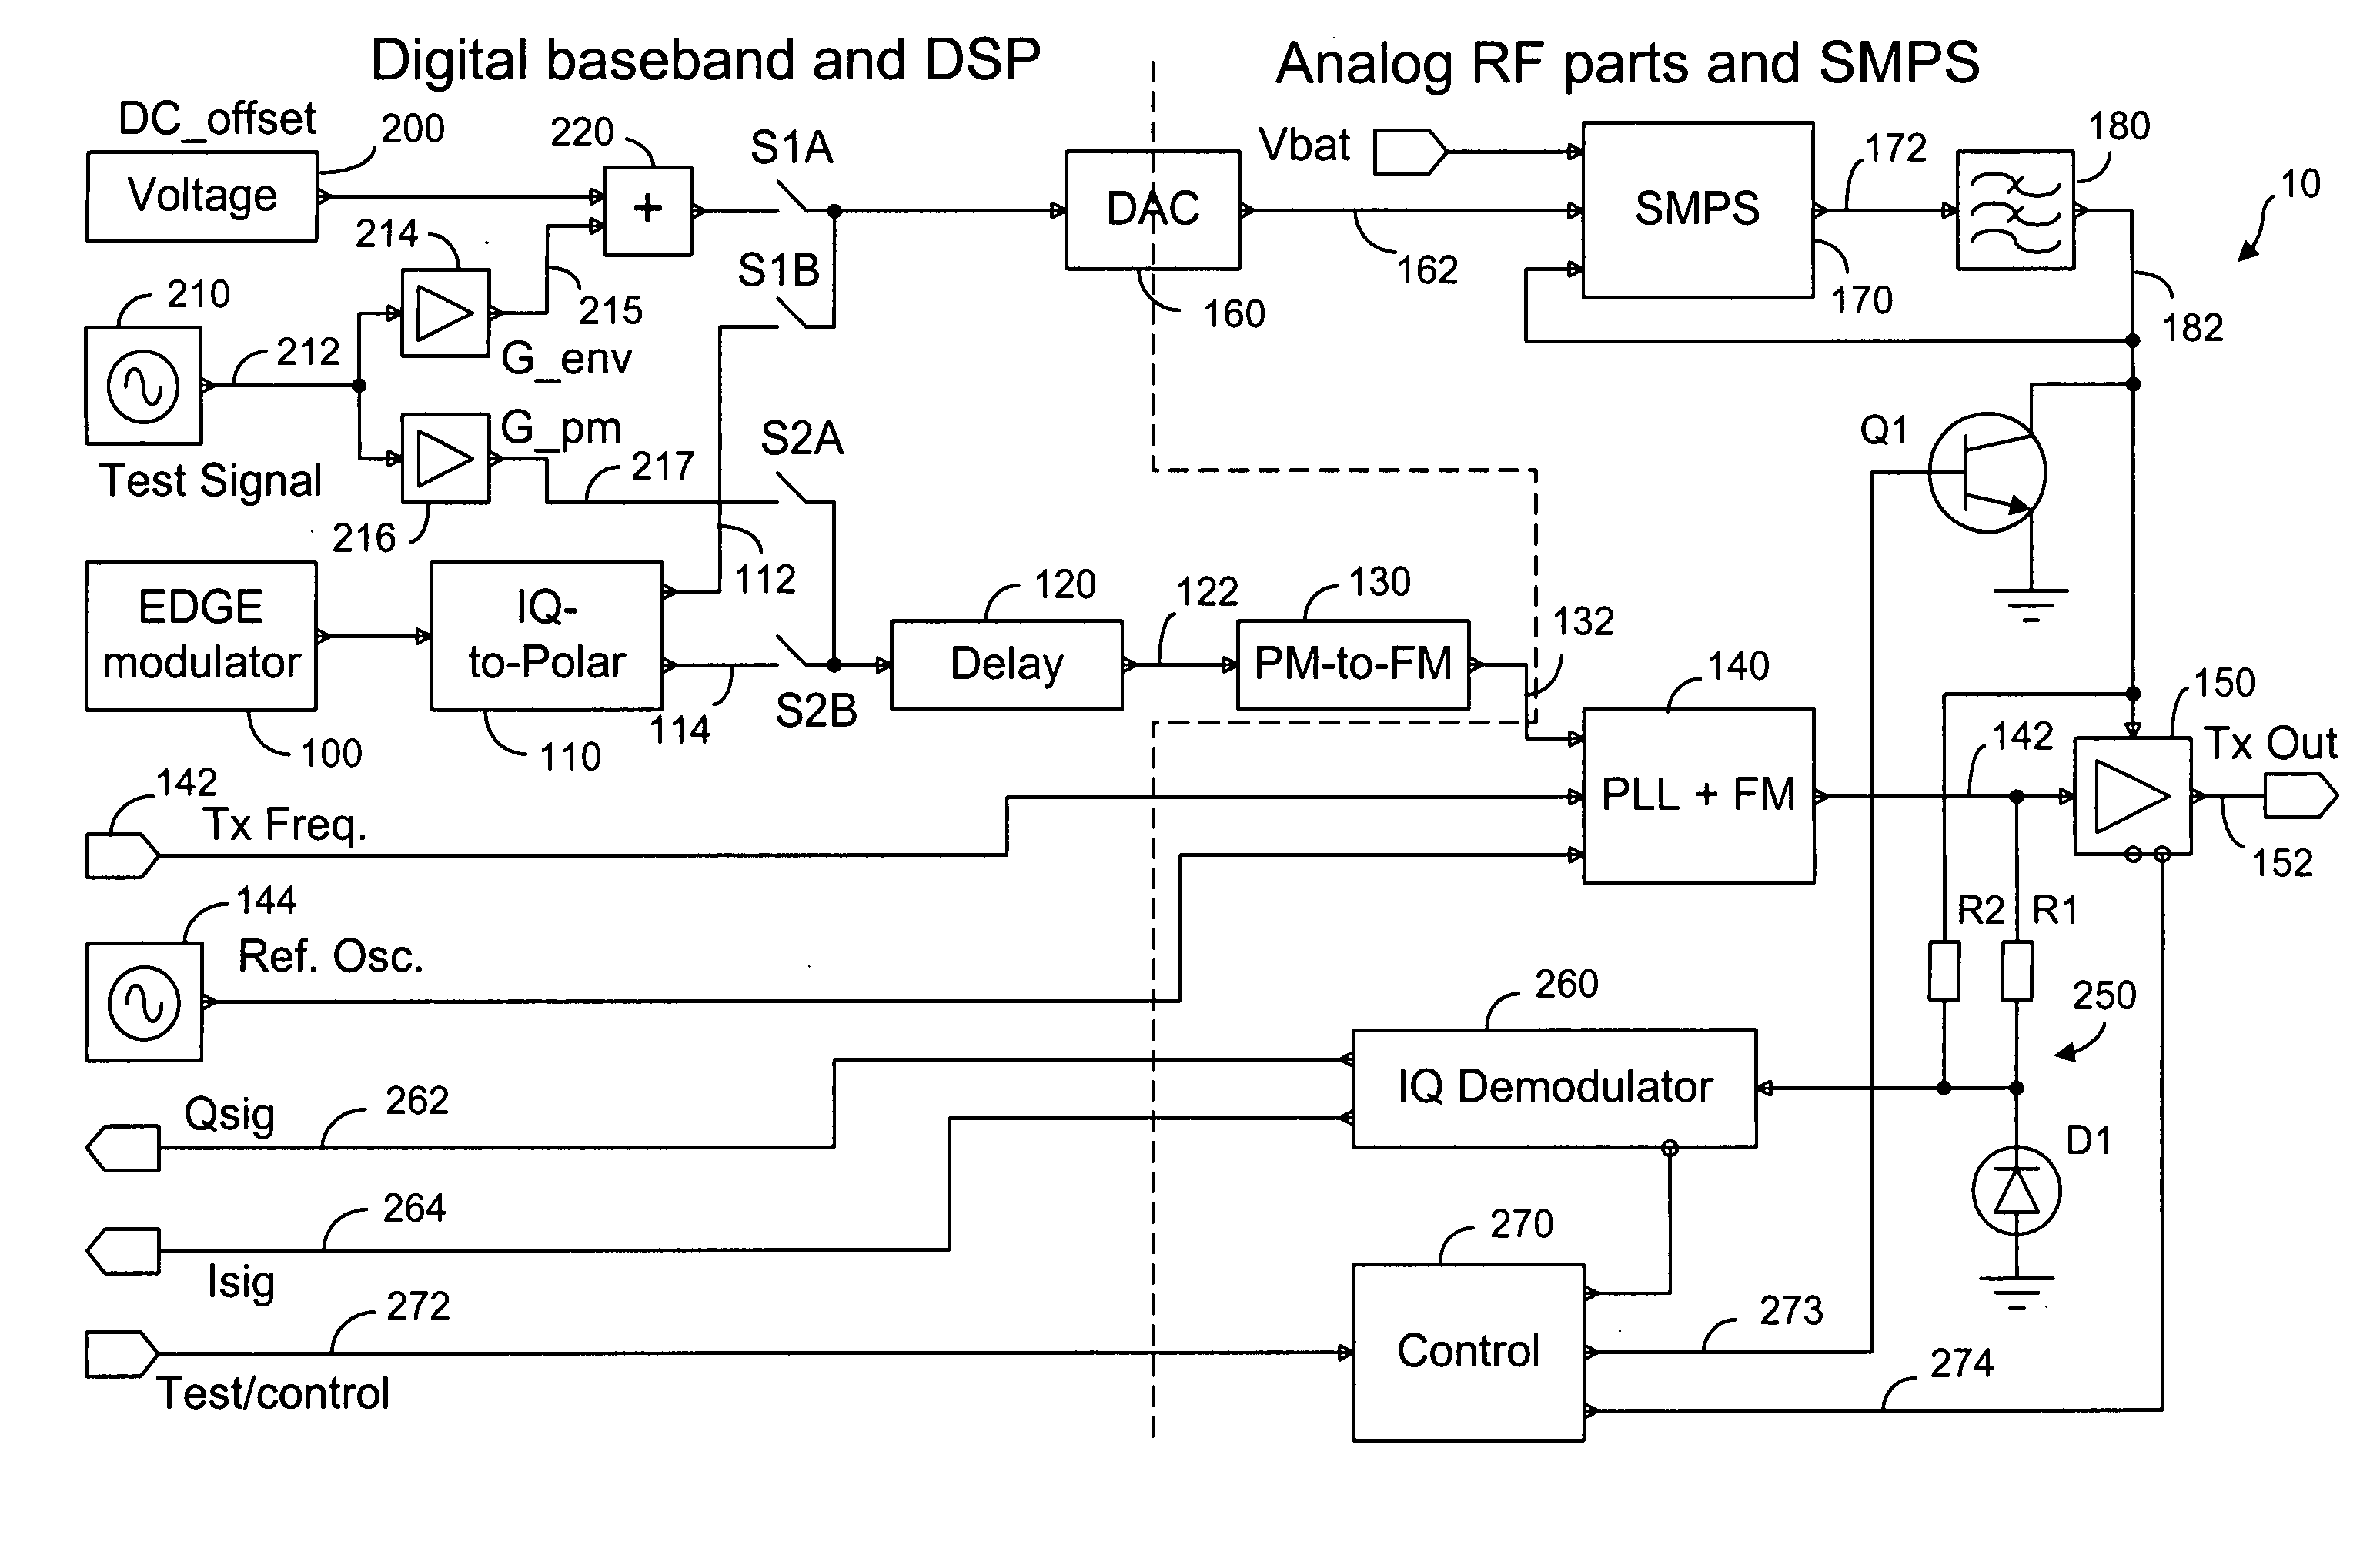 Method and system for transmitter envelope delay calibration